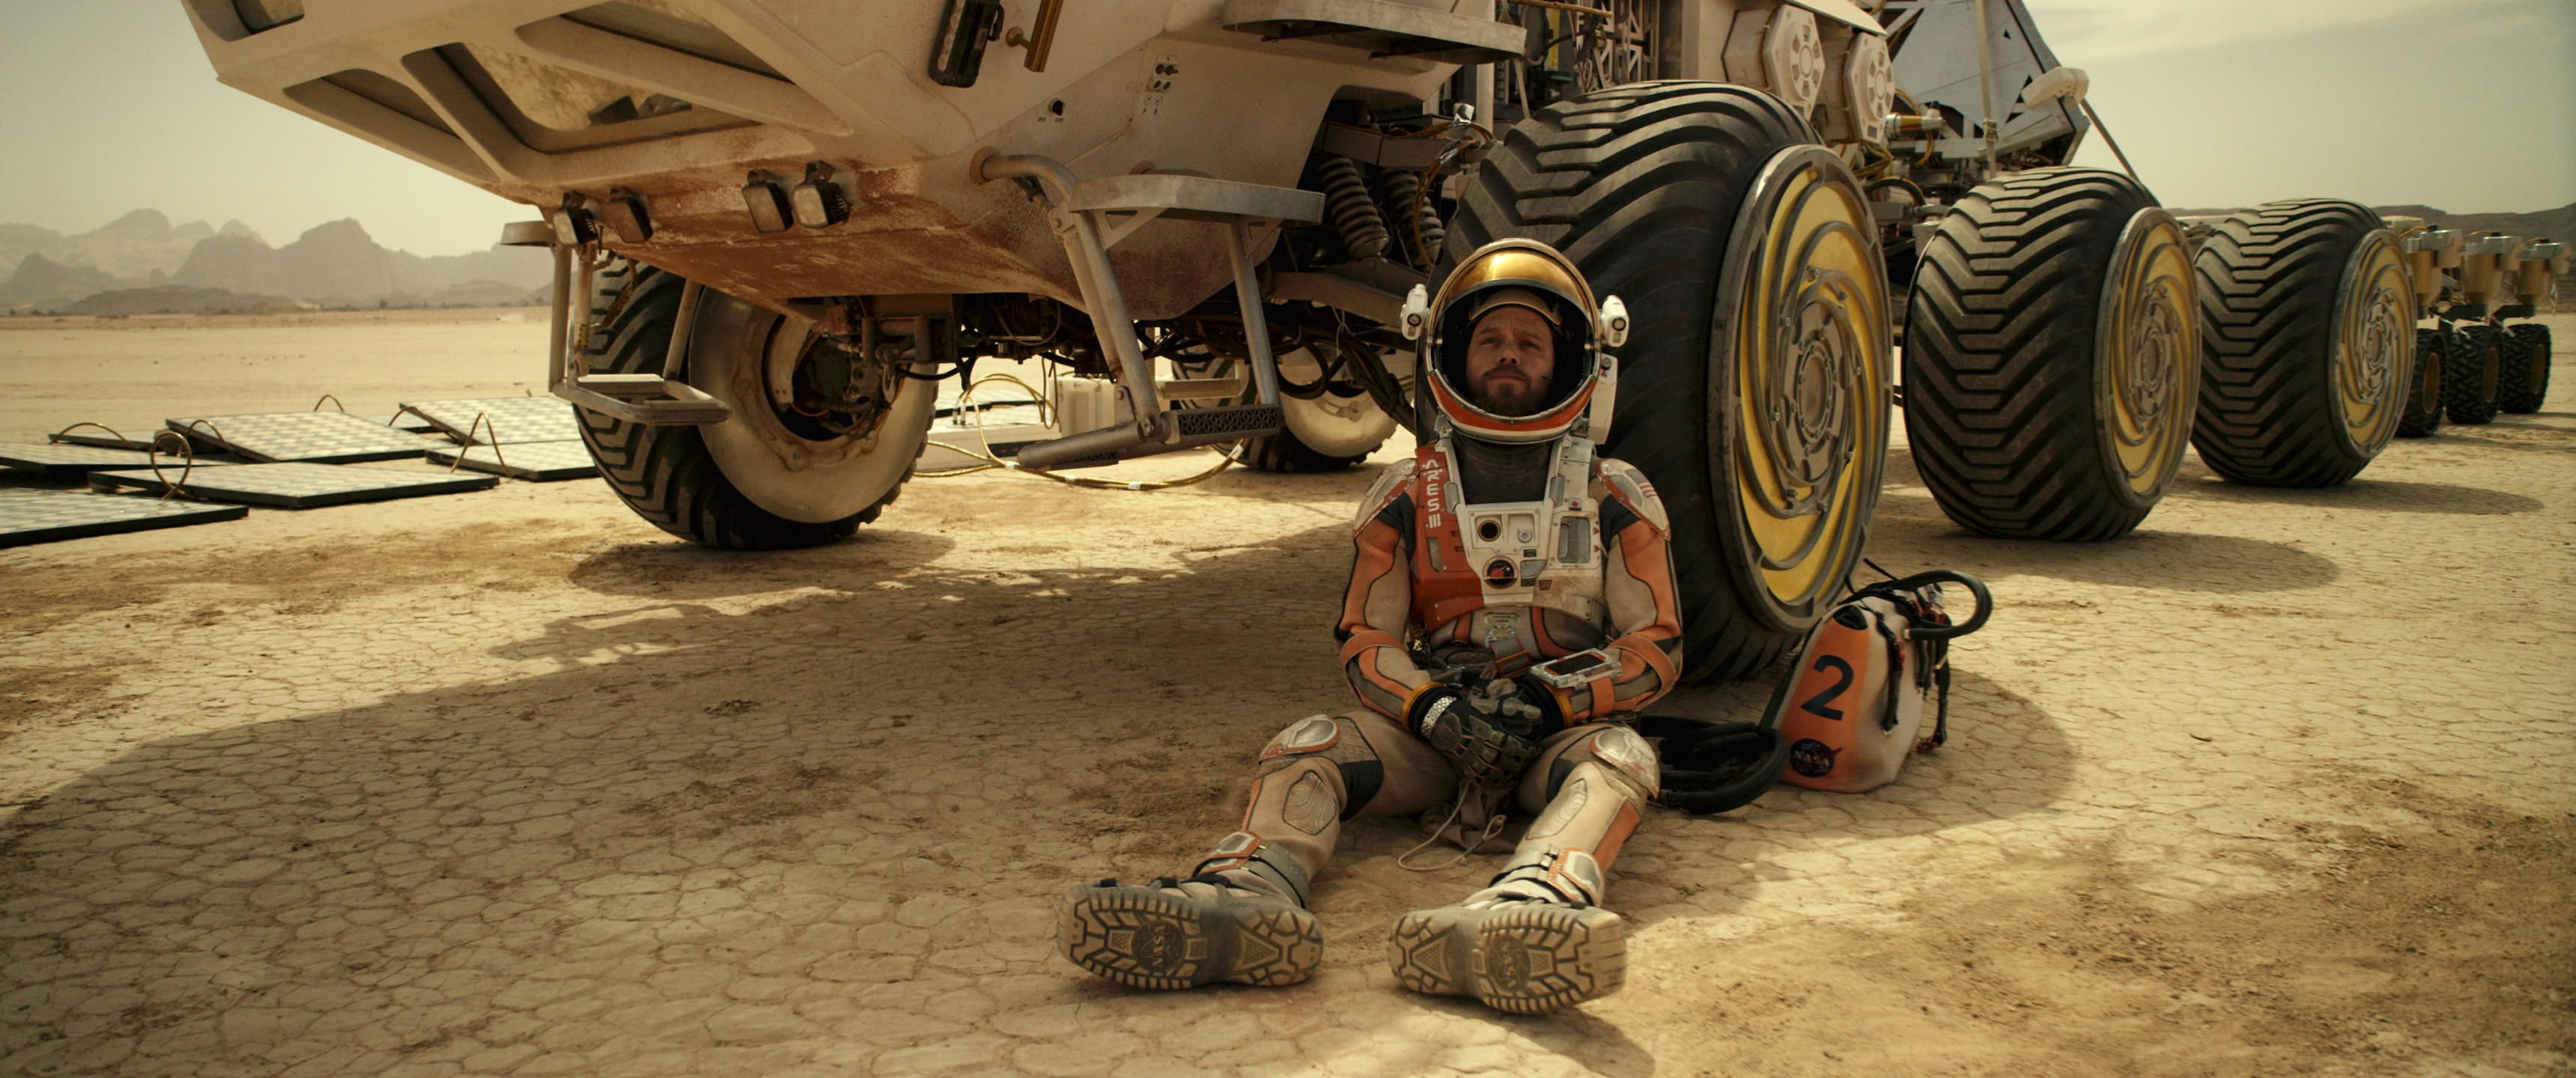 Astronaut Digital Art NASA The Martian Matt Damon 3440x1440